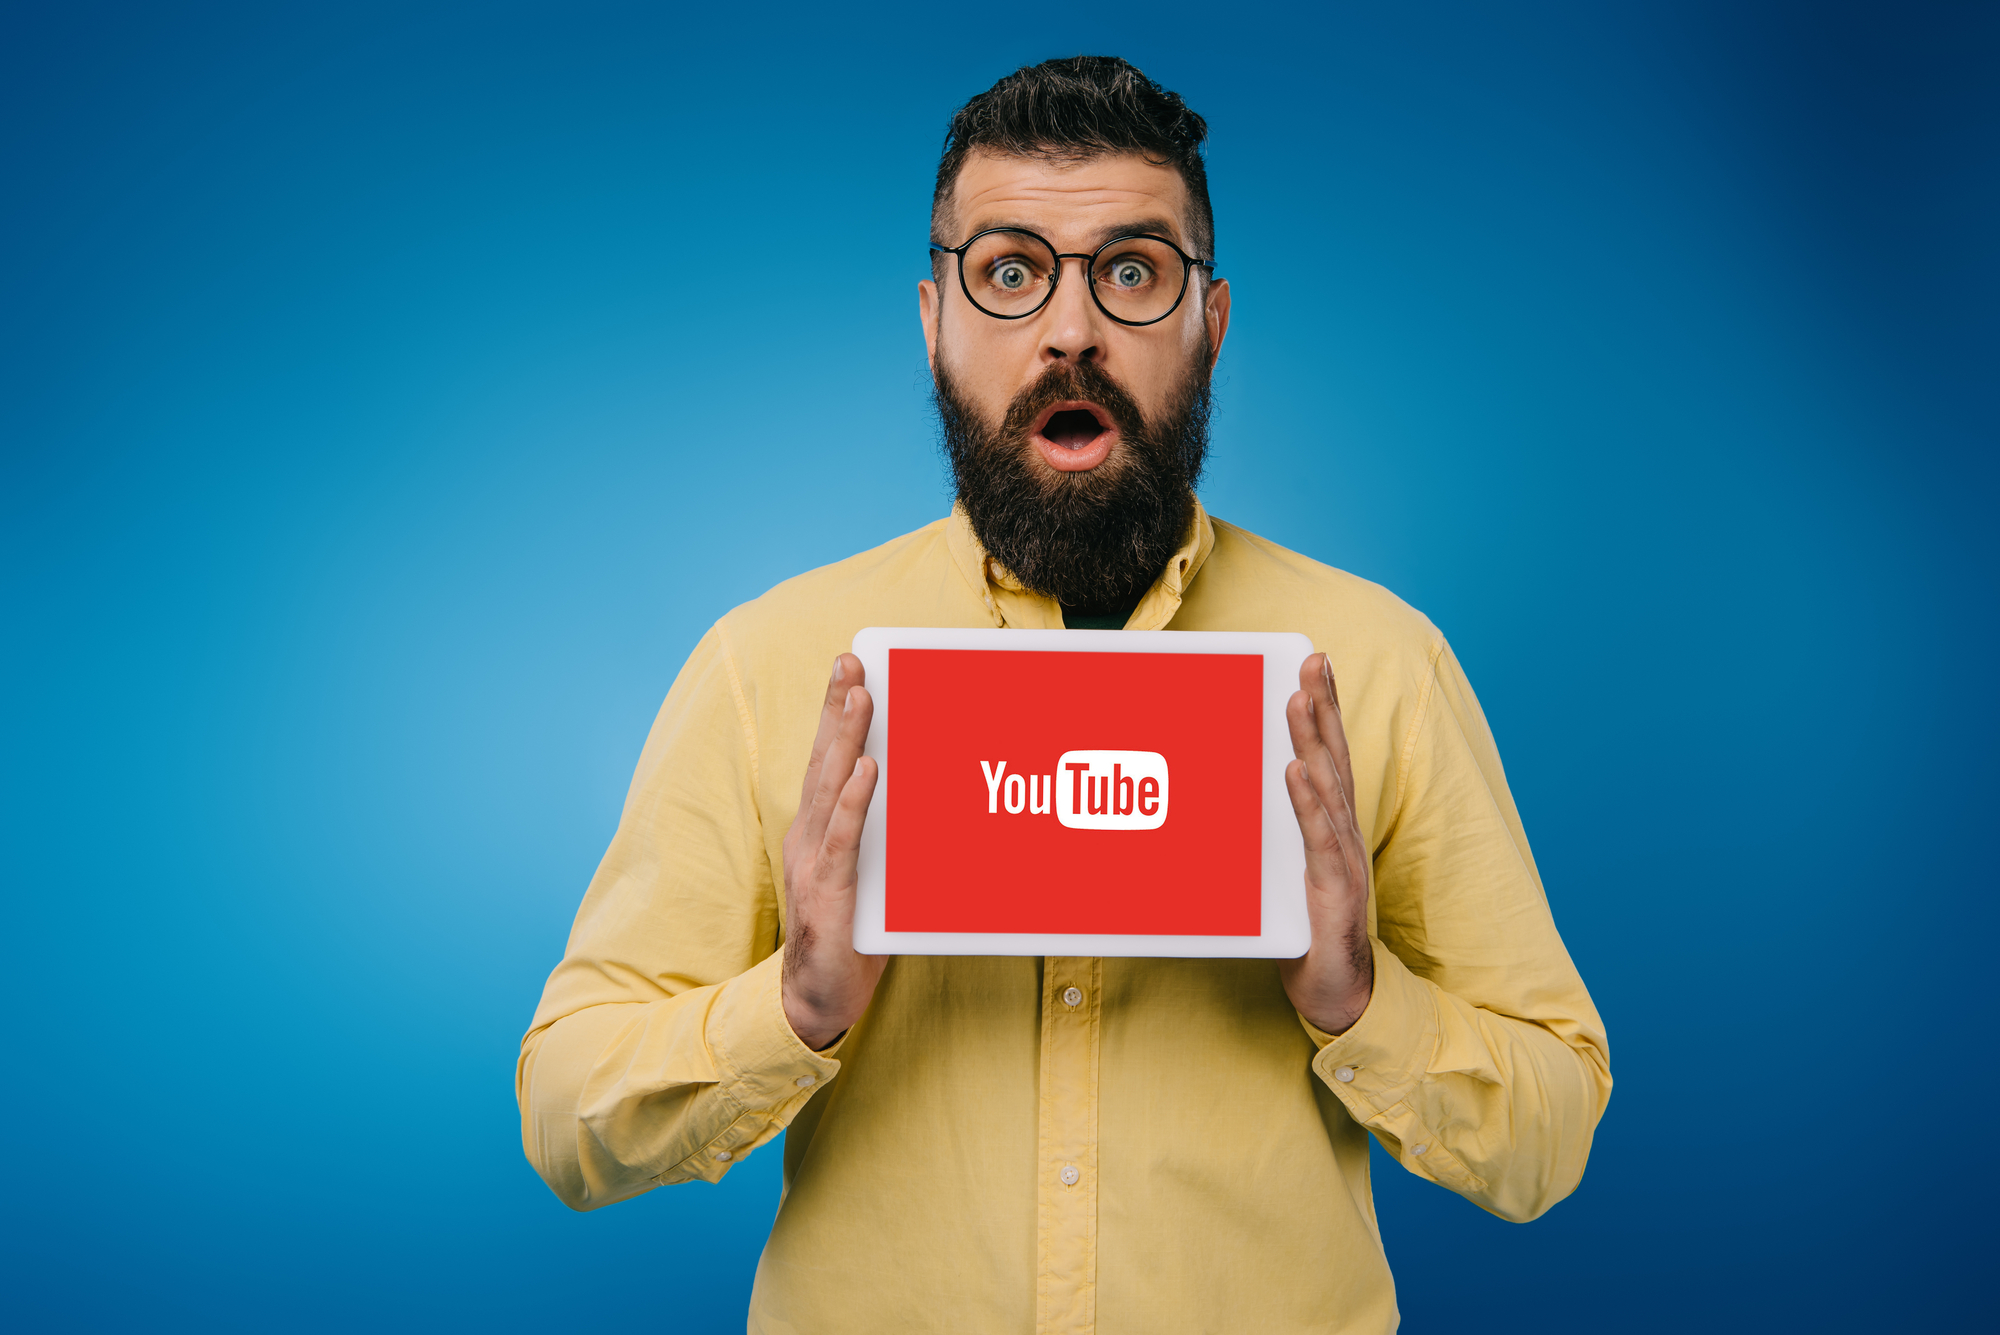 Japanischer YouTuber wegen Urheberrechtsverletzung verurteilt